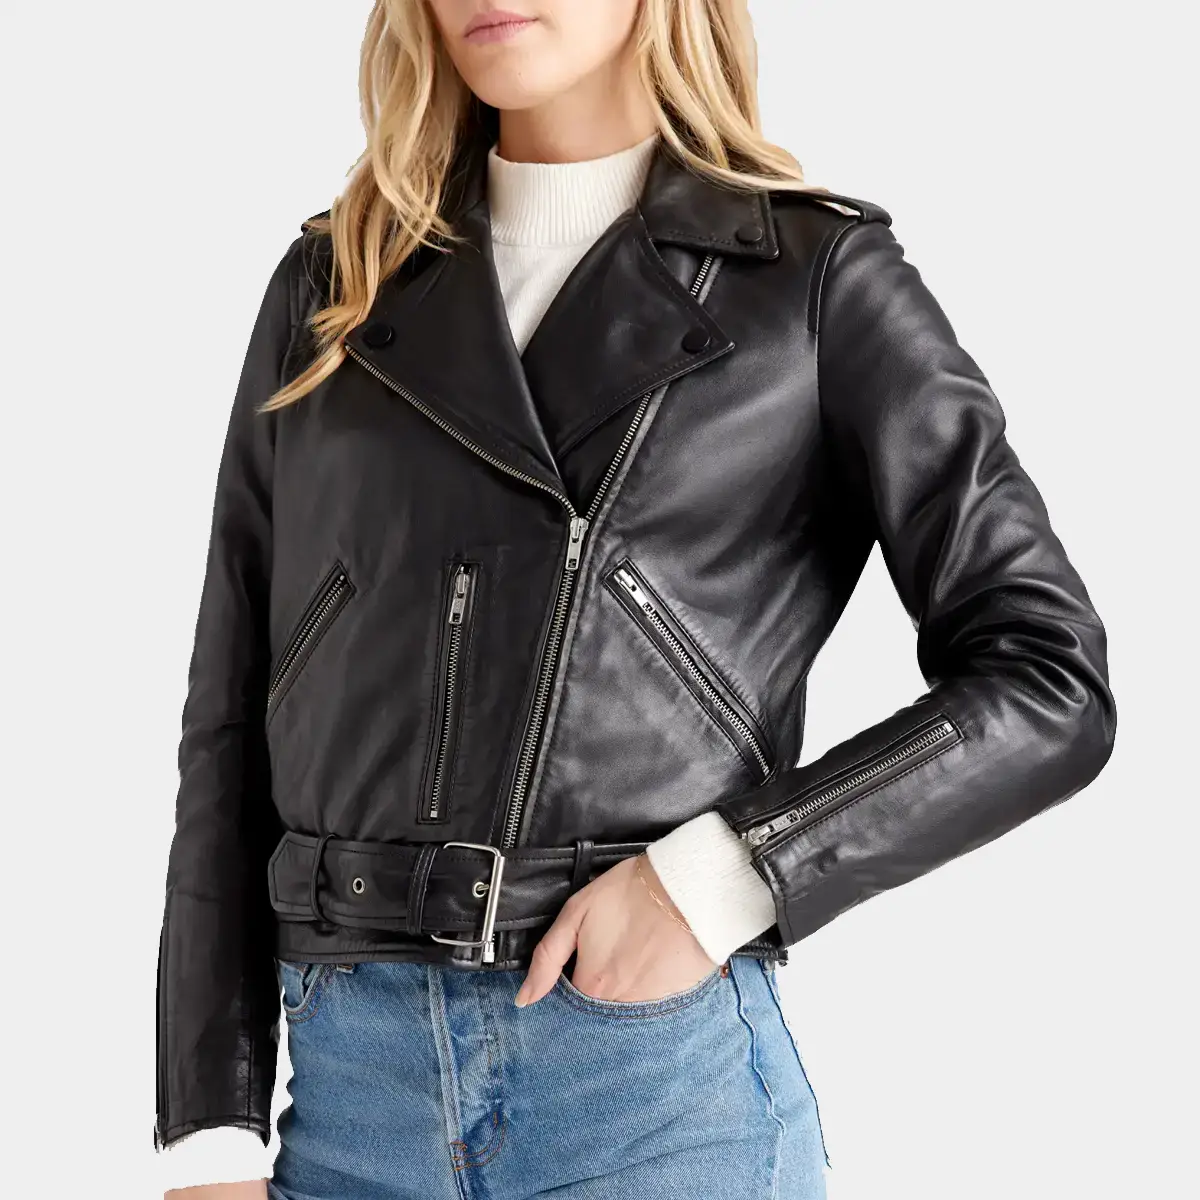 Black leather jackets women